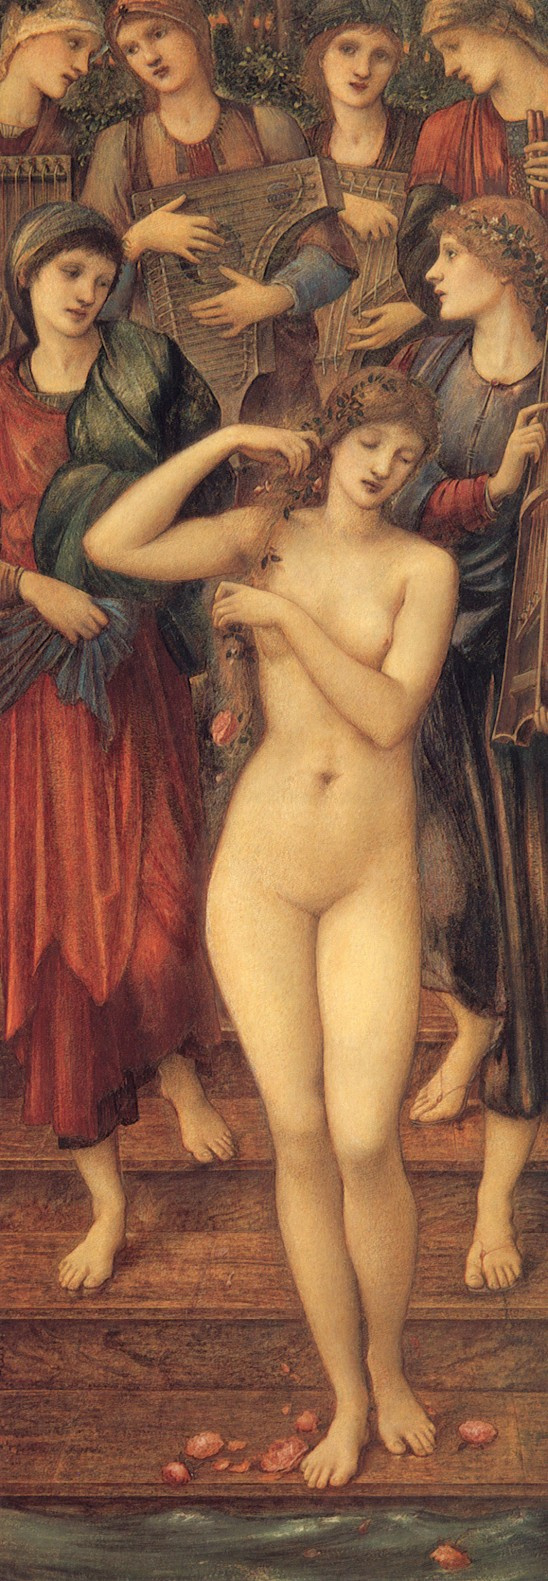 Edward Coley Burne-Jones. The Bath of Venus